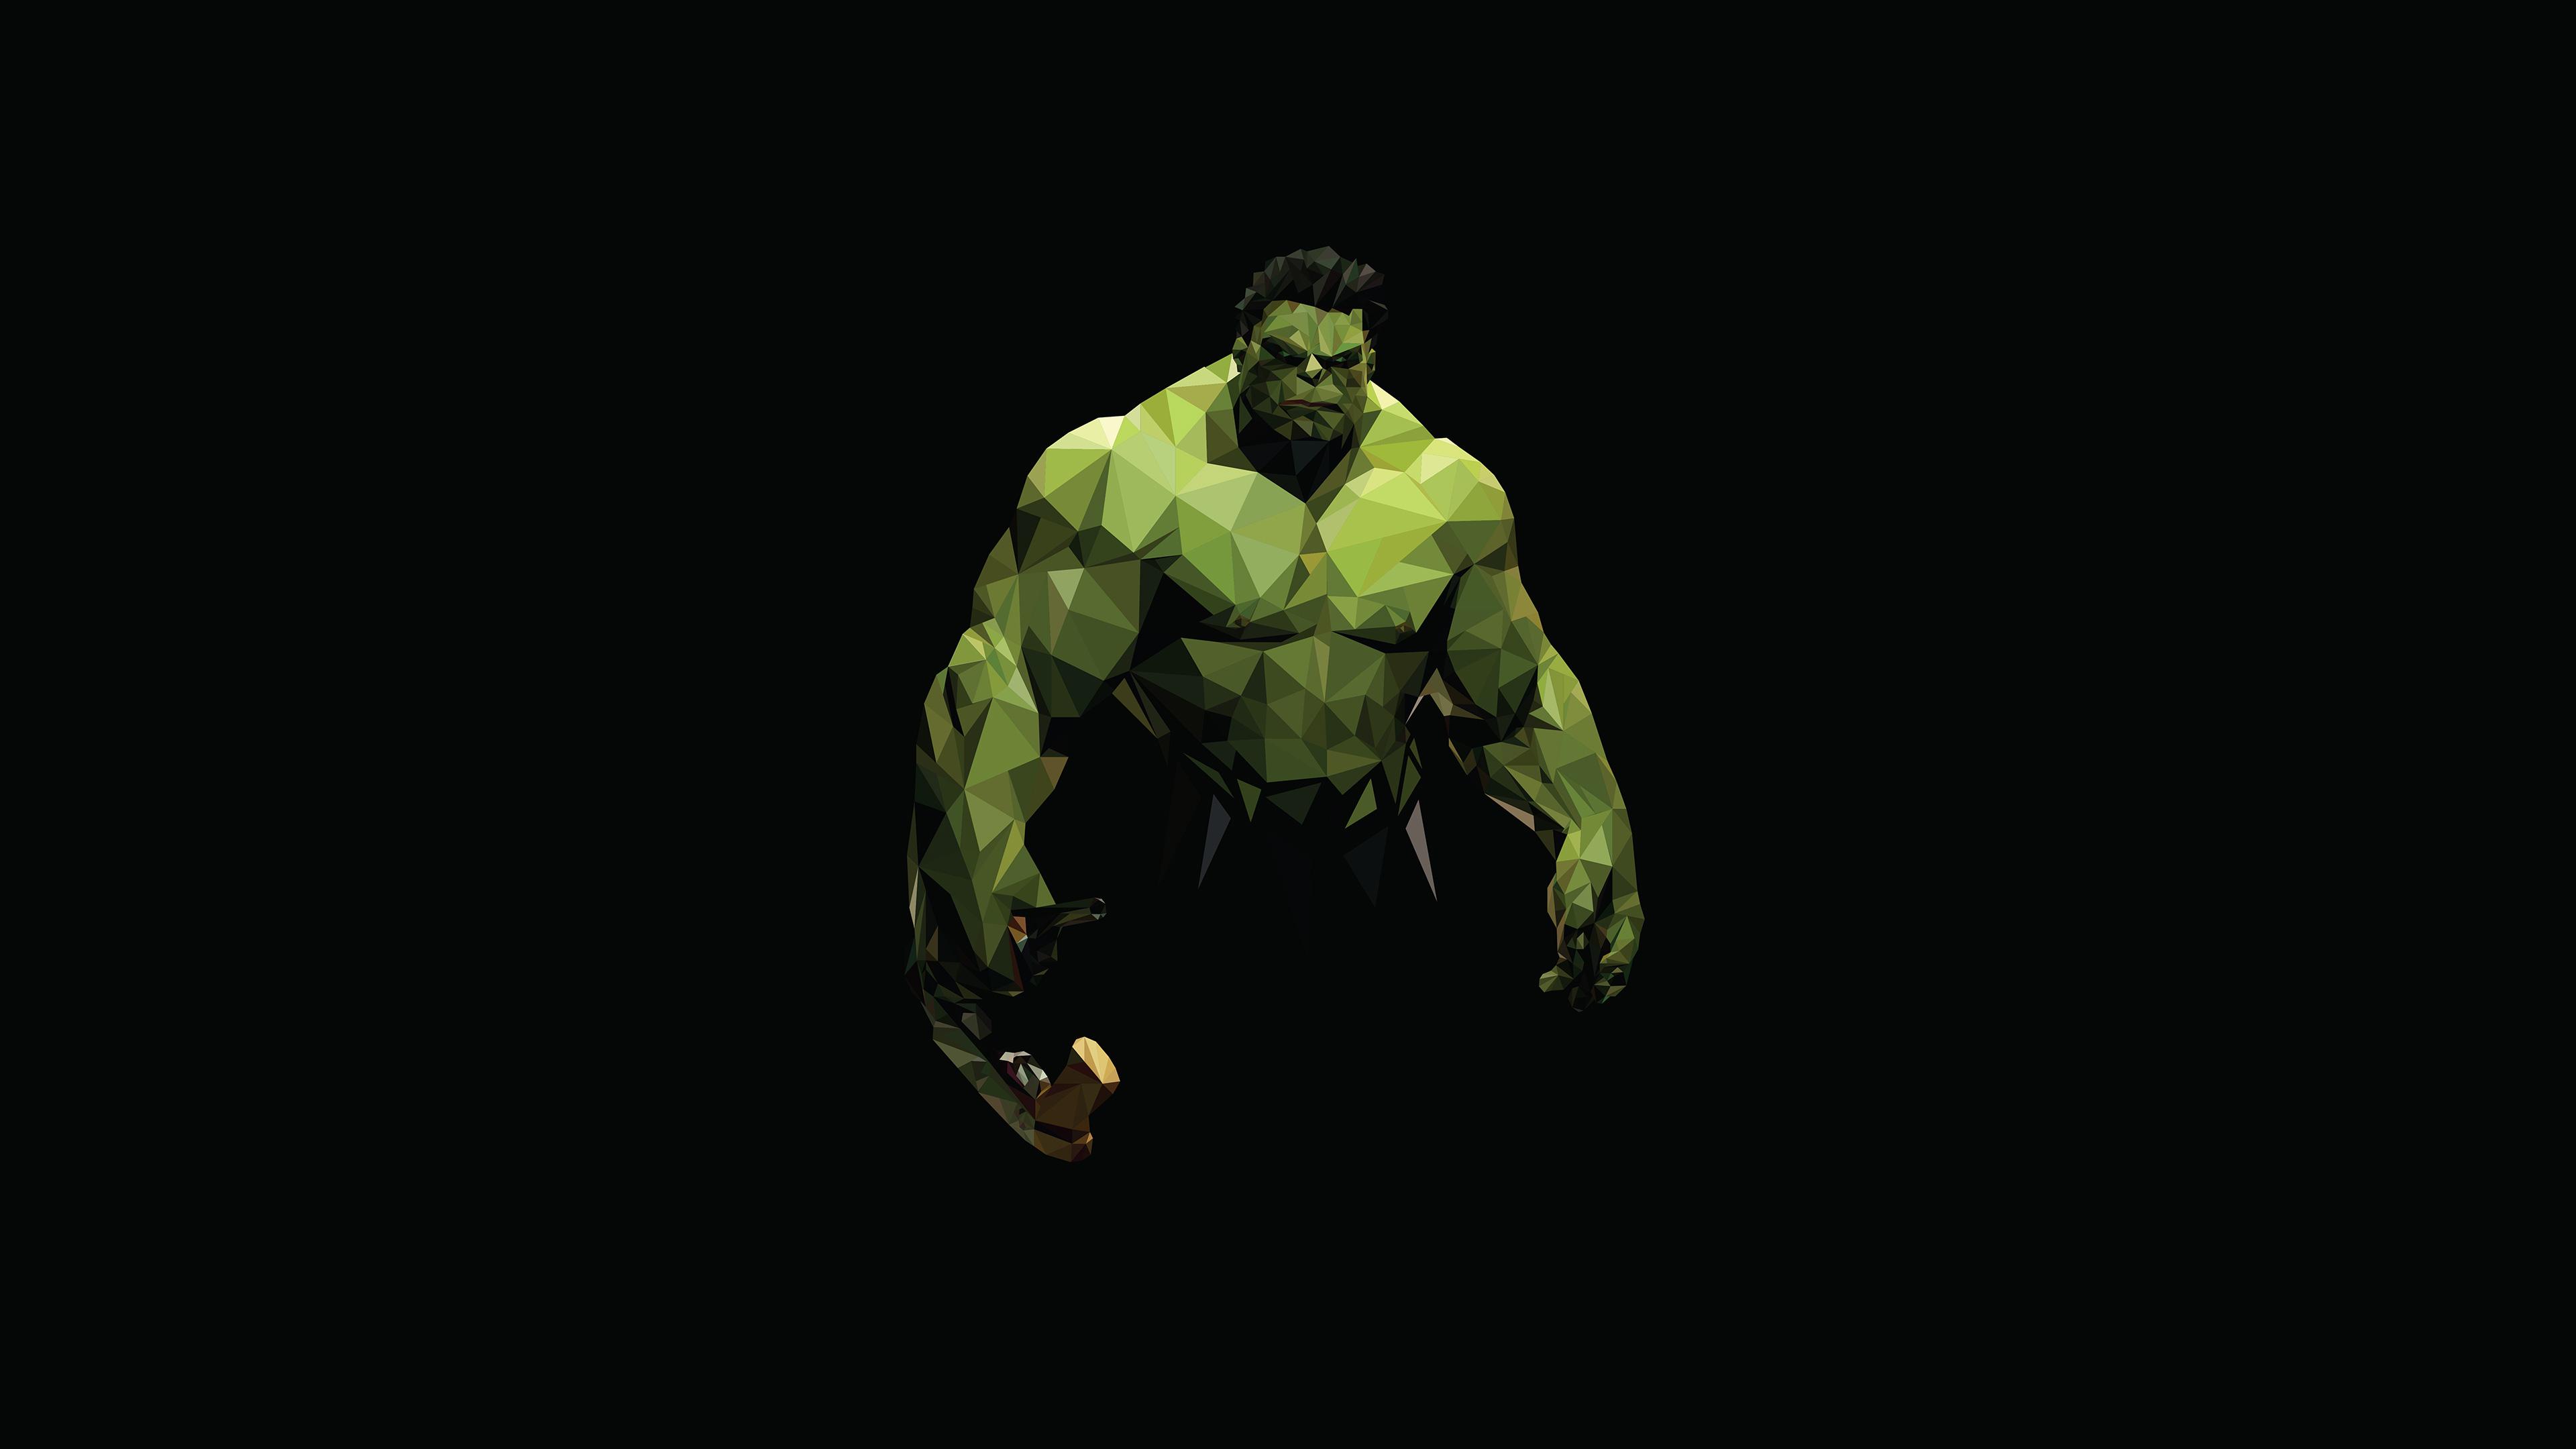 Wallpaper Hulk, Low poly, Black, Minimal, 4K, Creative Graphics